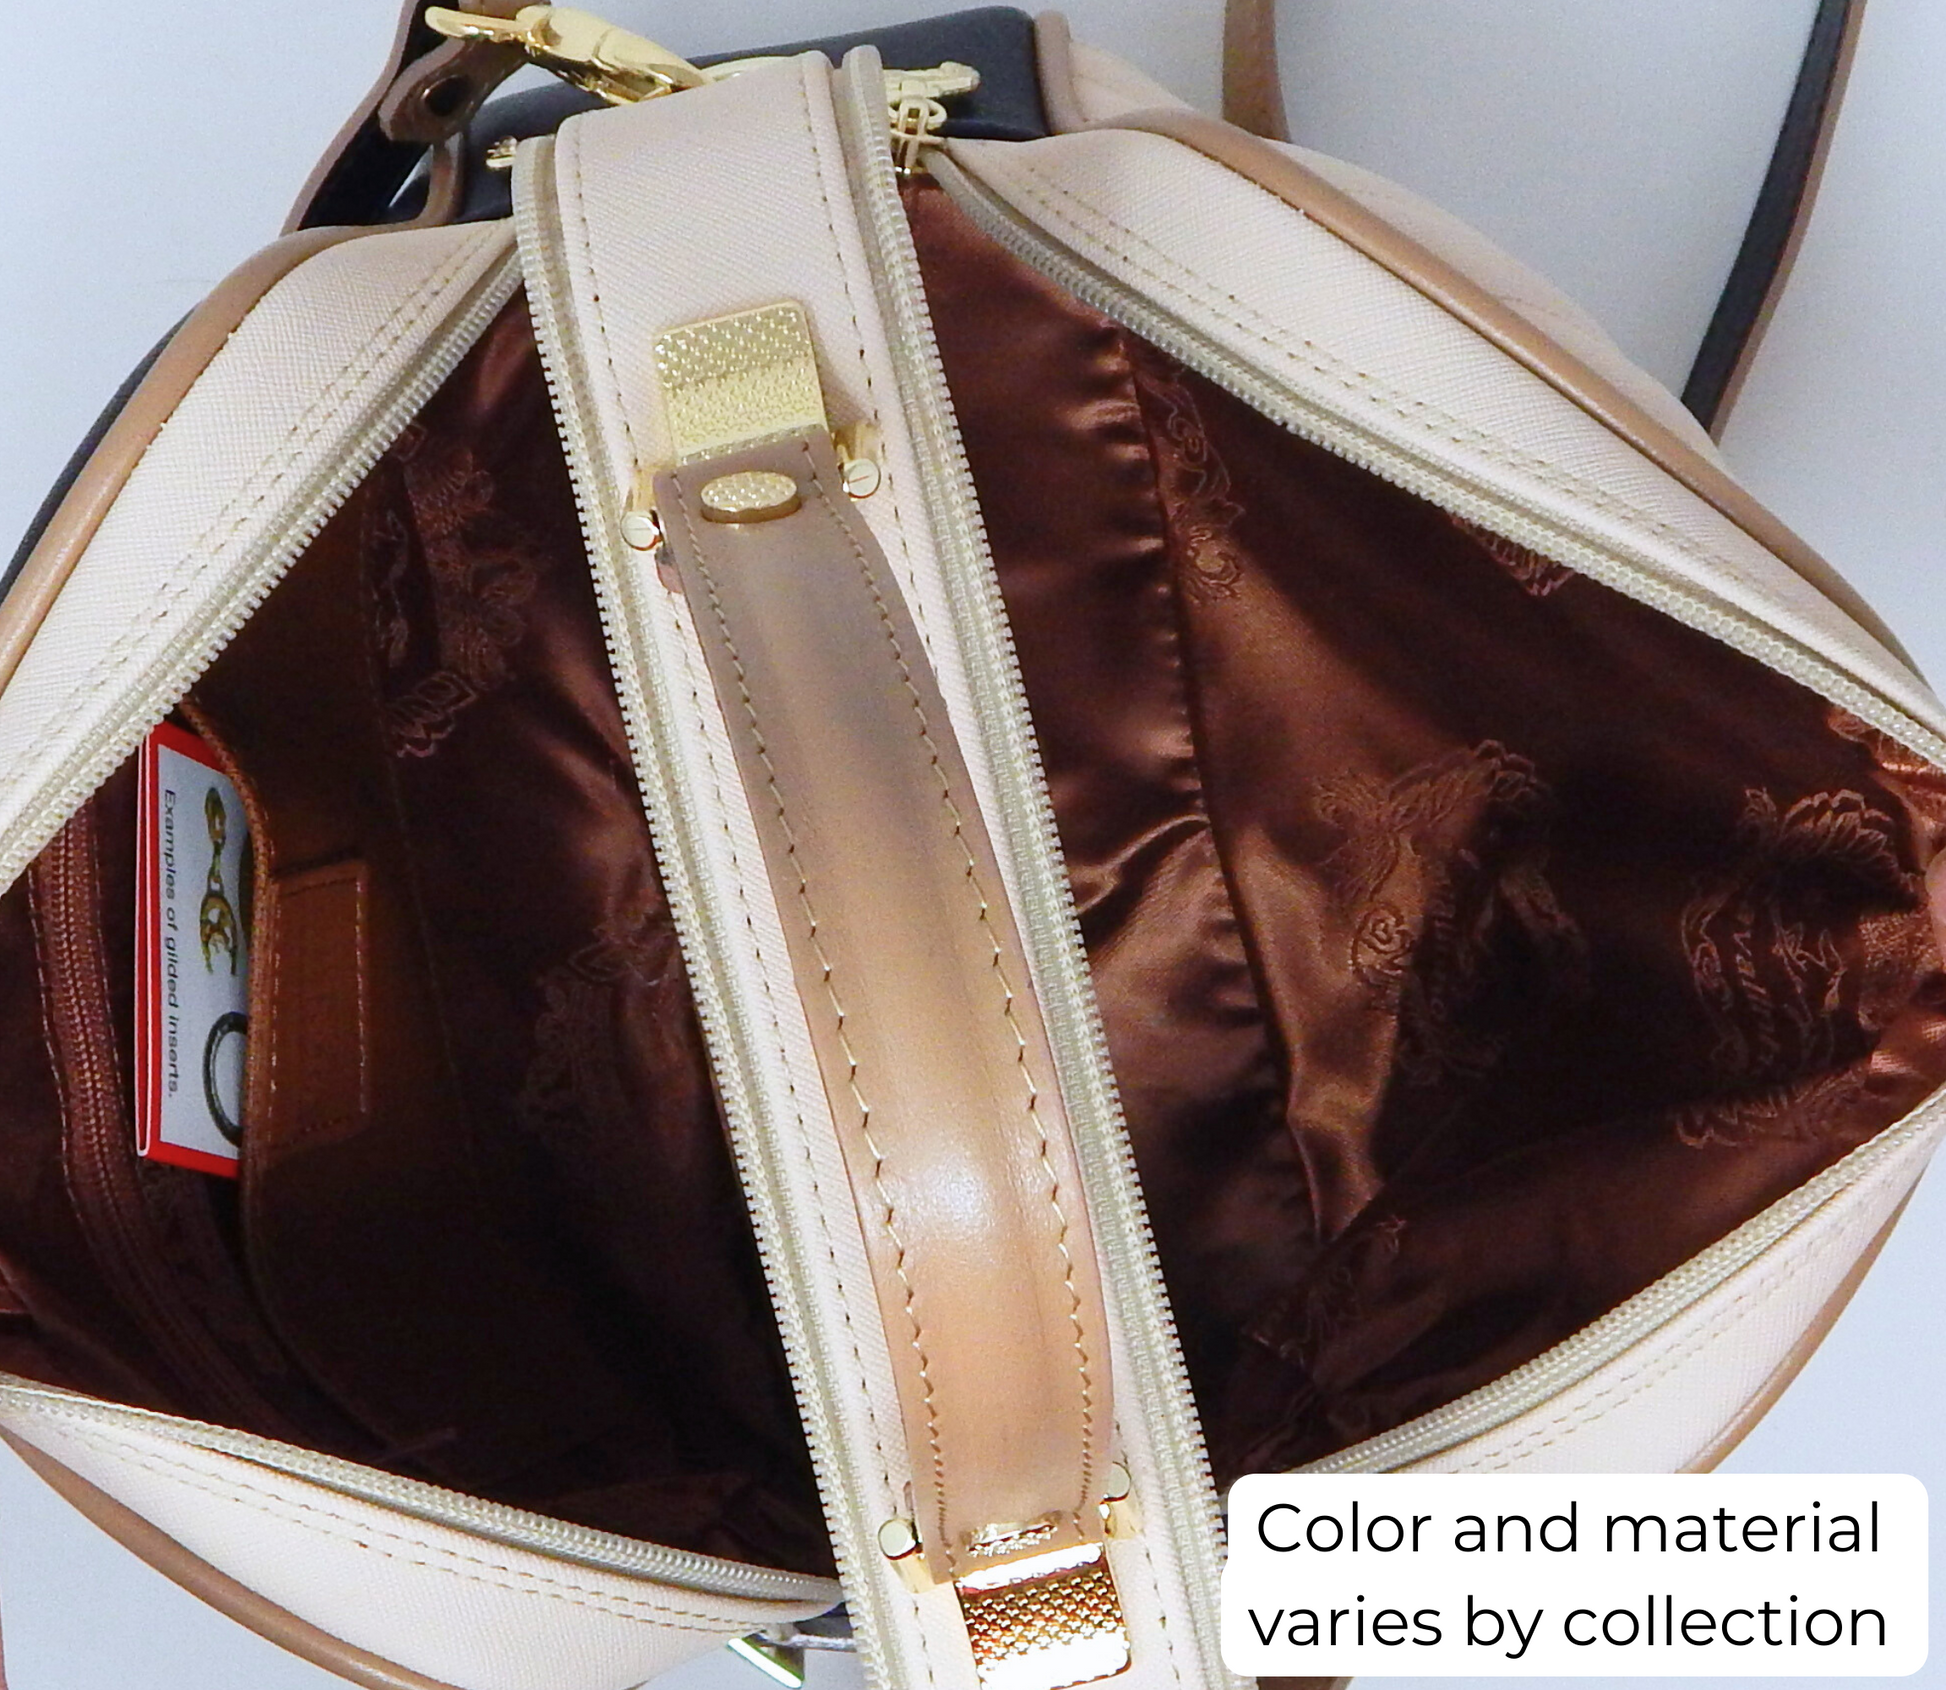 Cavalinho Charming Handbag - Black - inside_0186_1